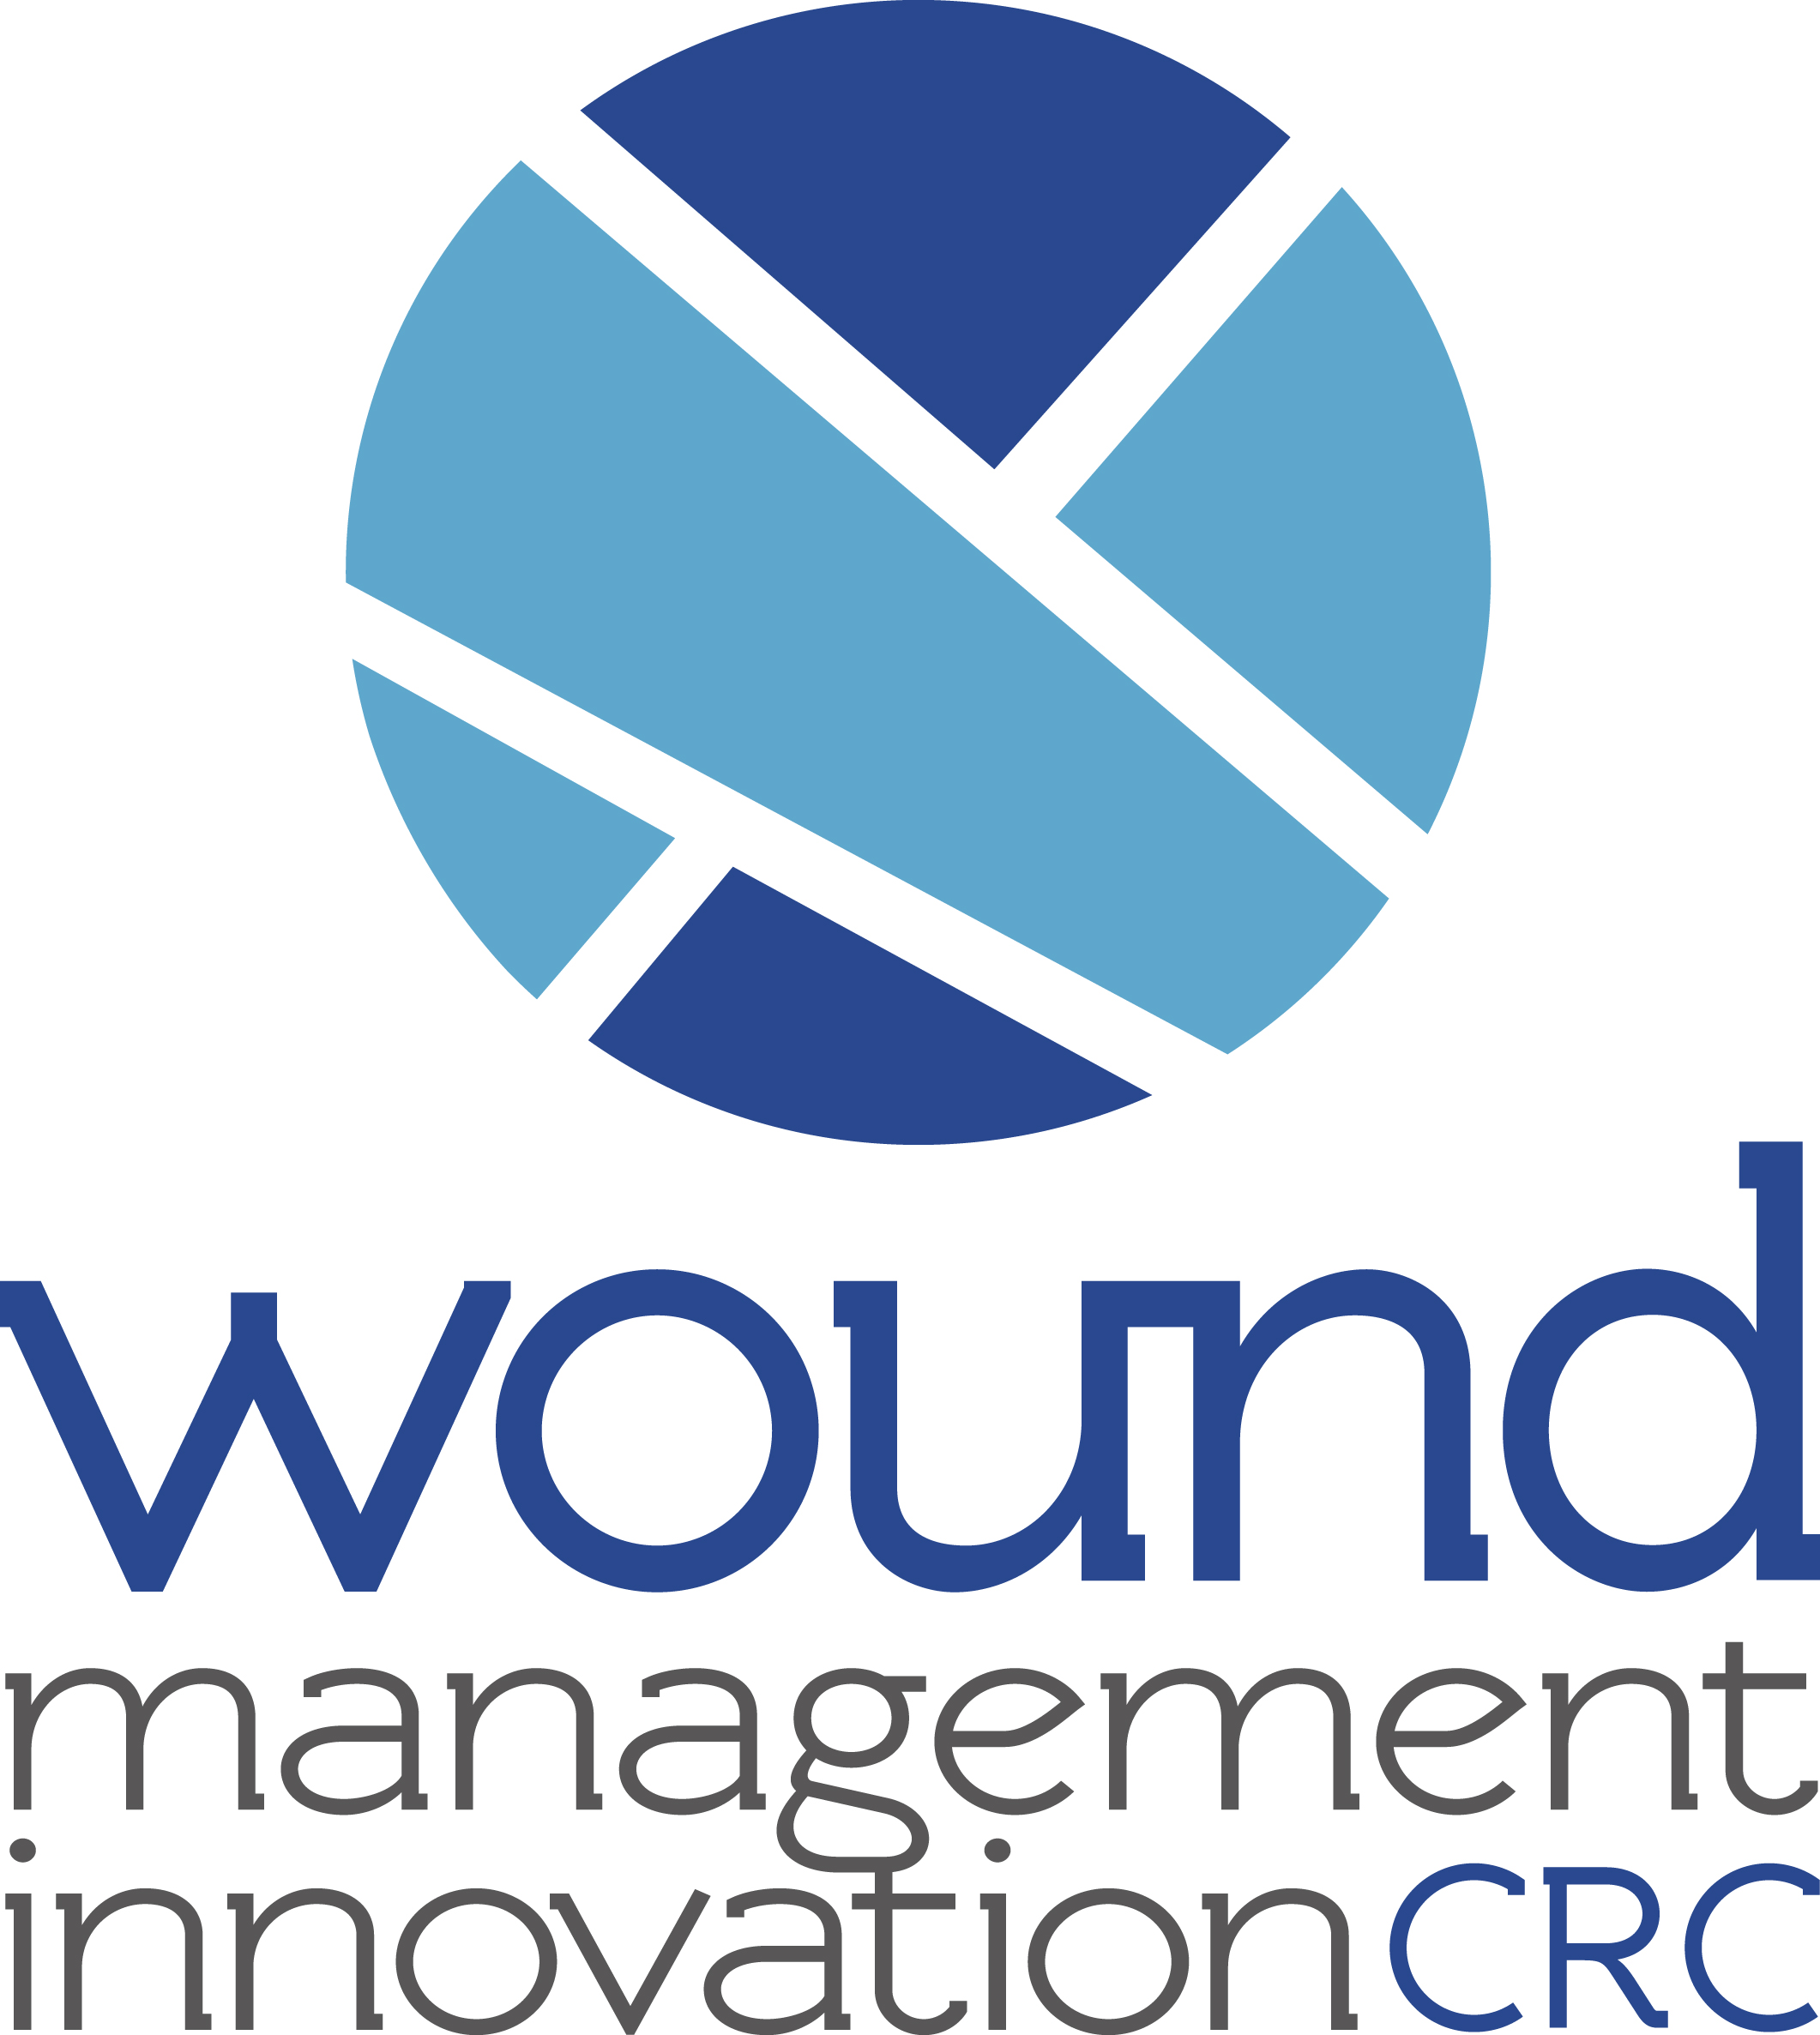 Wound Management Innovation CRC logo